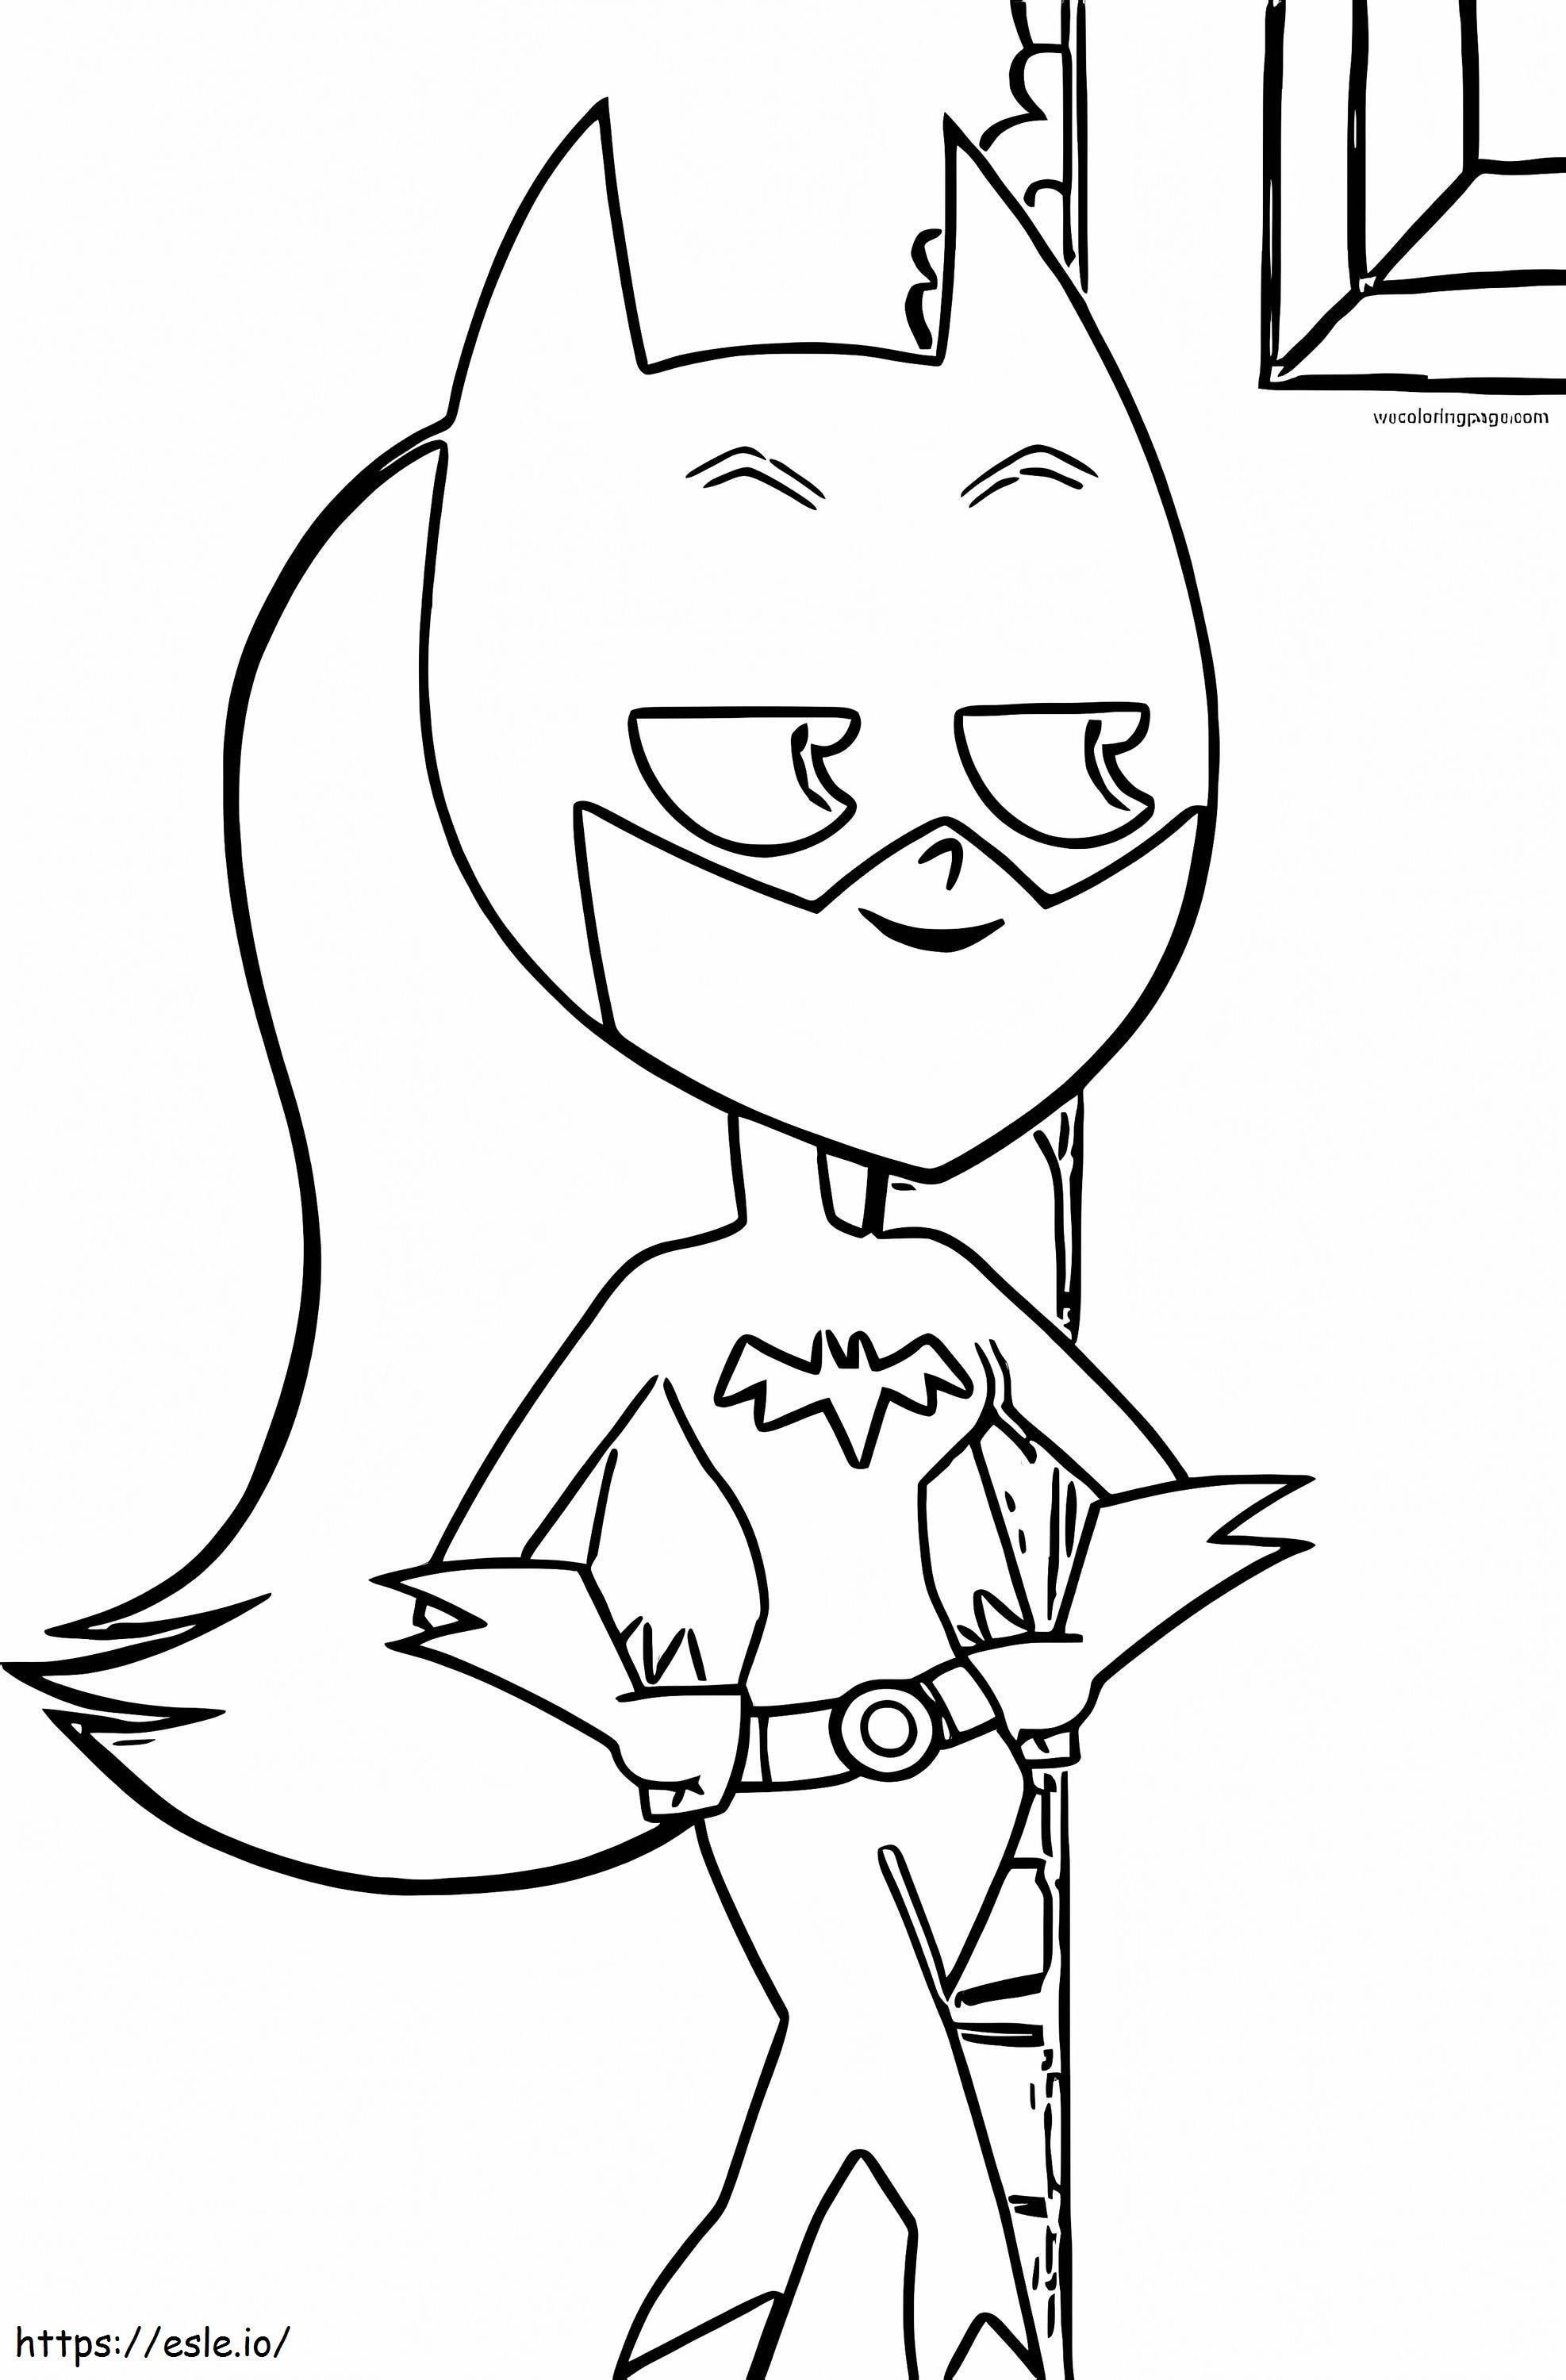 Coloriage Dessin animé Batgirl à imprimer dessin